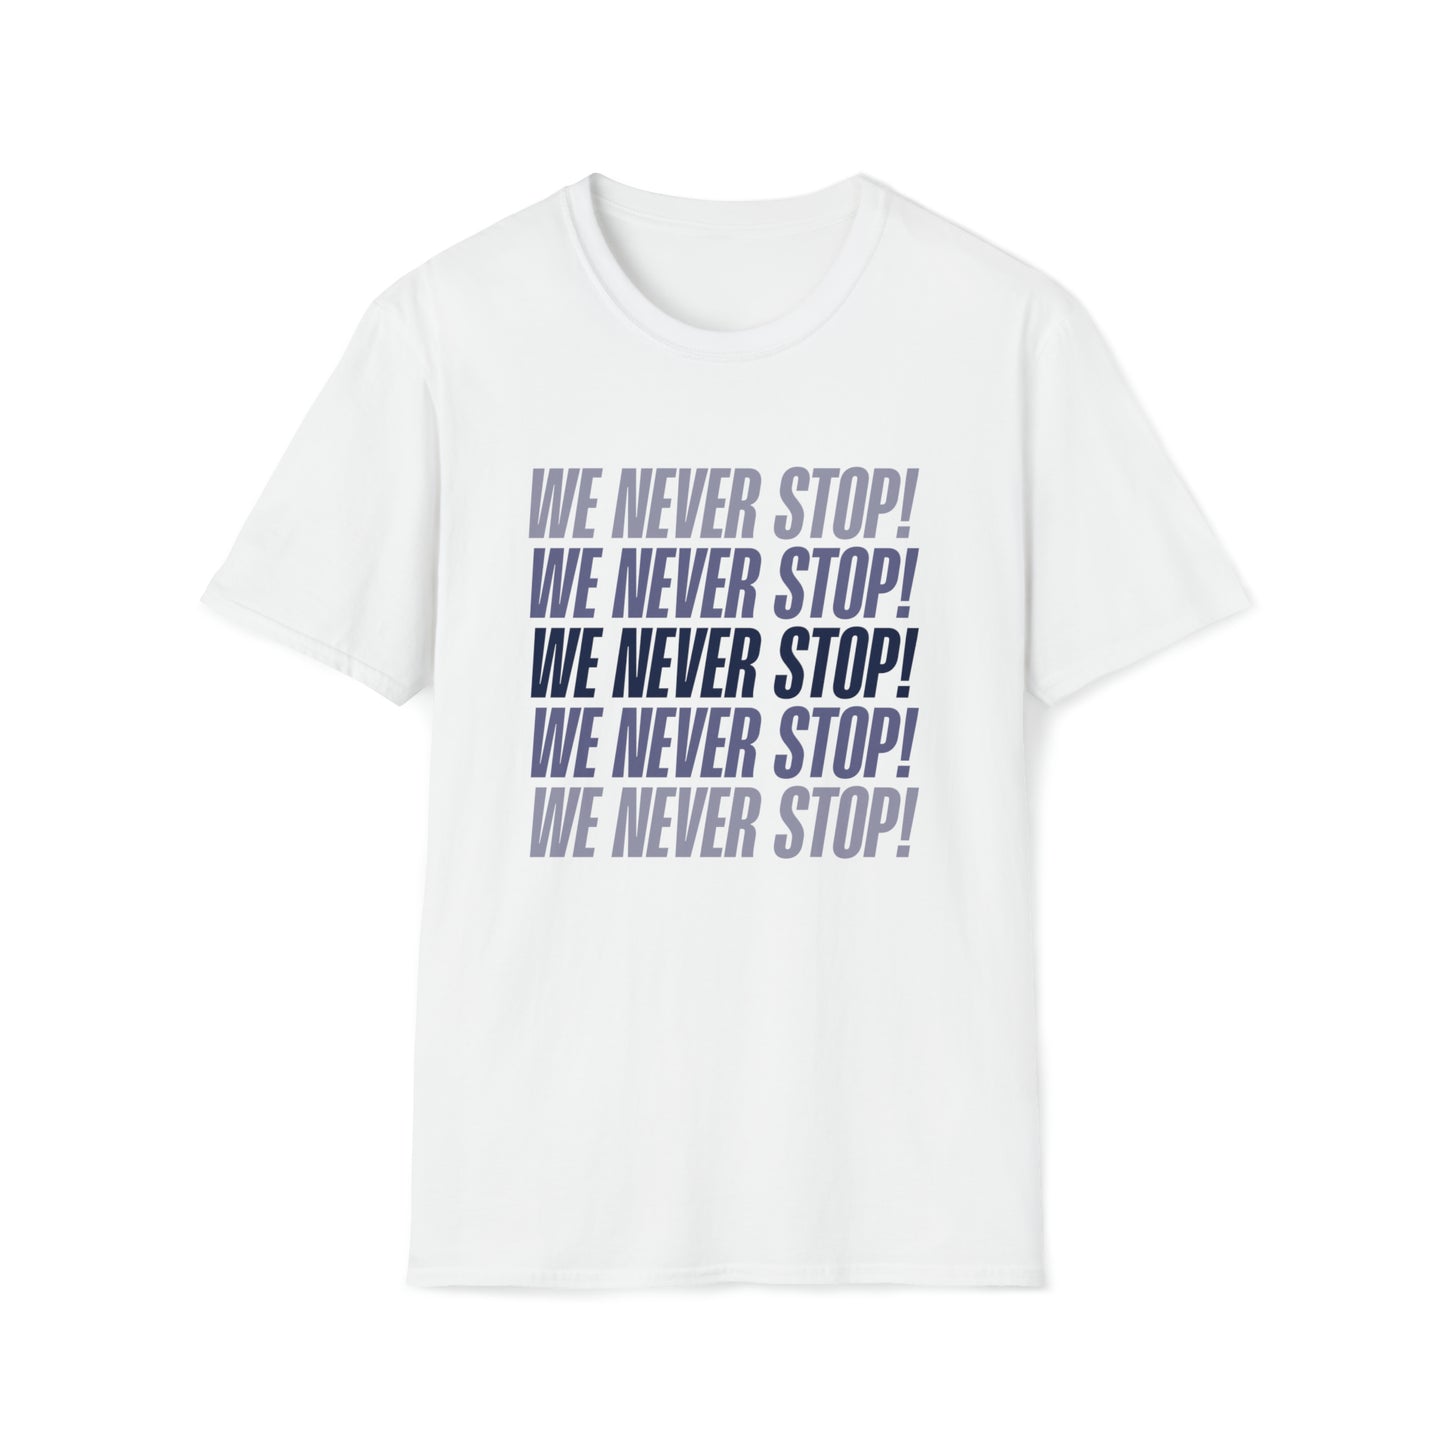 We Never Stop!!